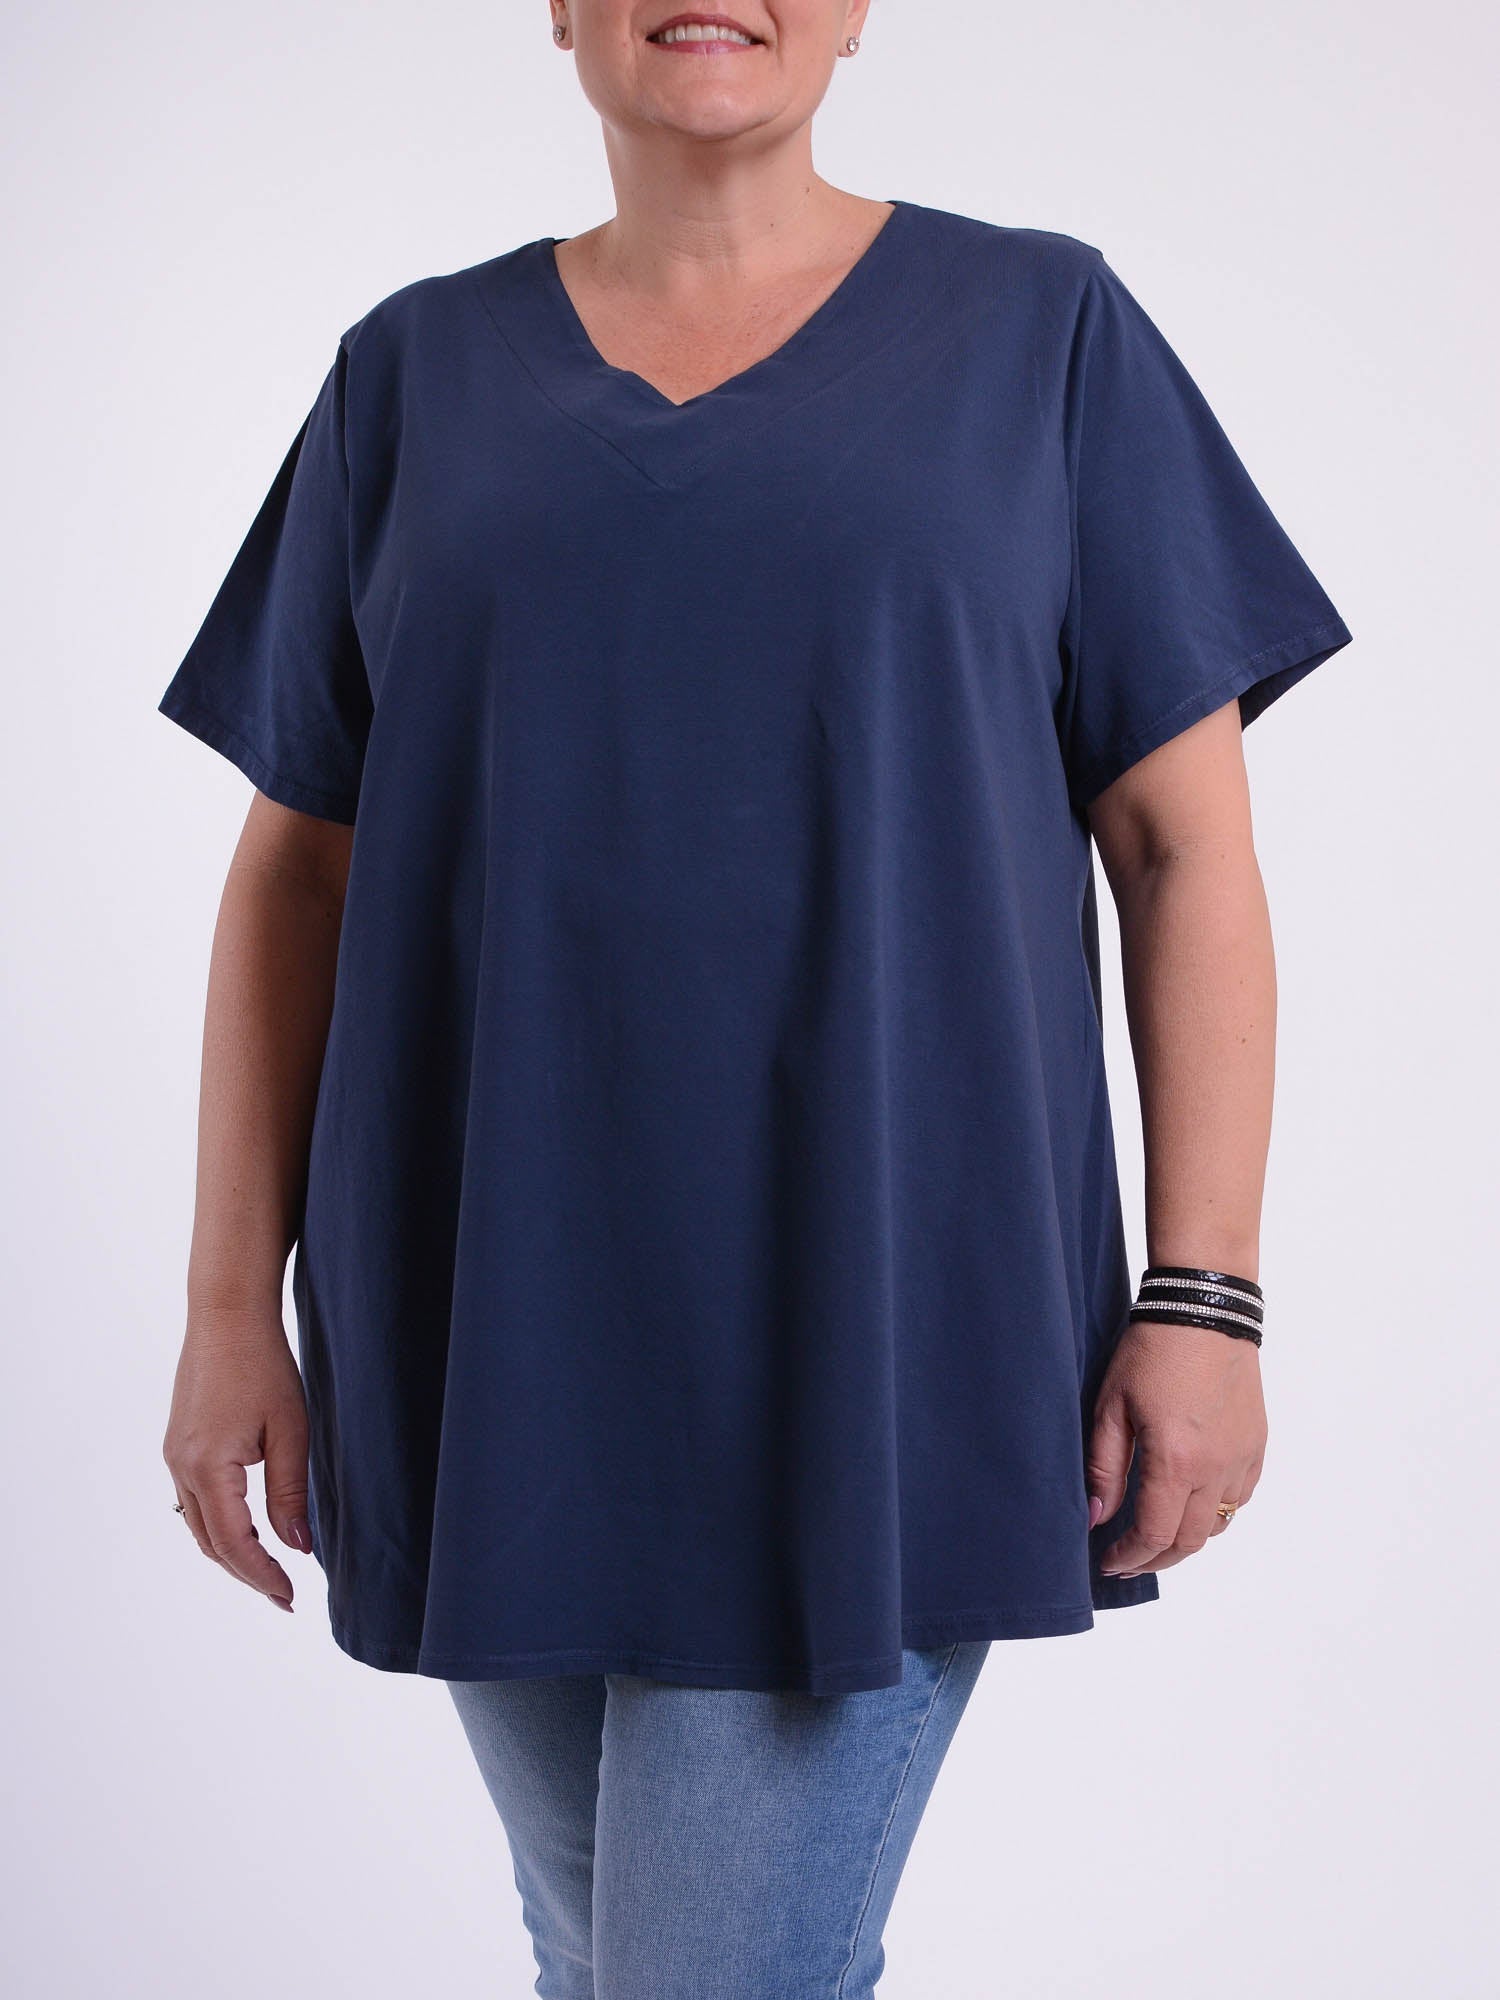 Basic Cotton Swing T Shirt - V Neck 10520, Tops & Shirts, Pure Plus Clothing, Lagenlook Clothing, Plus Size Fashion, Over 50 Fashion